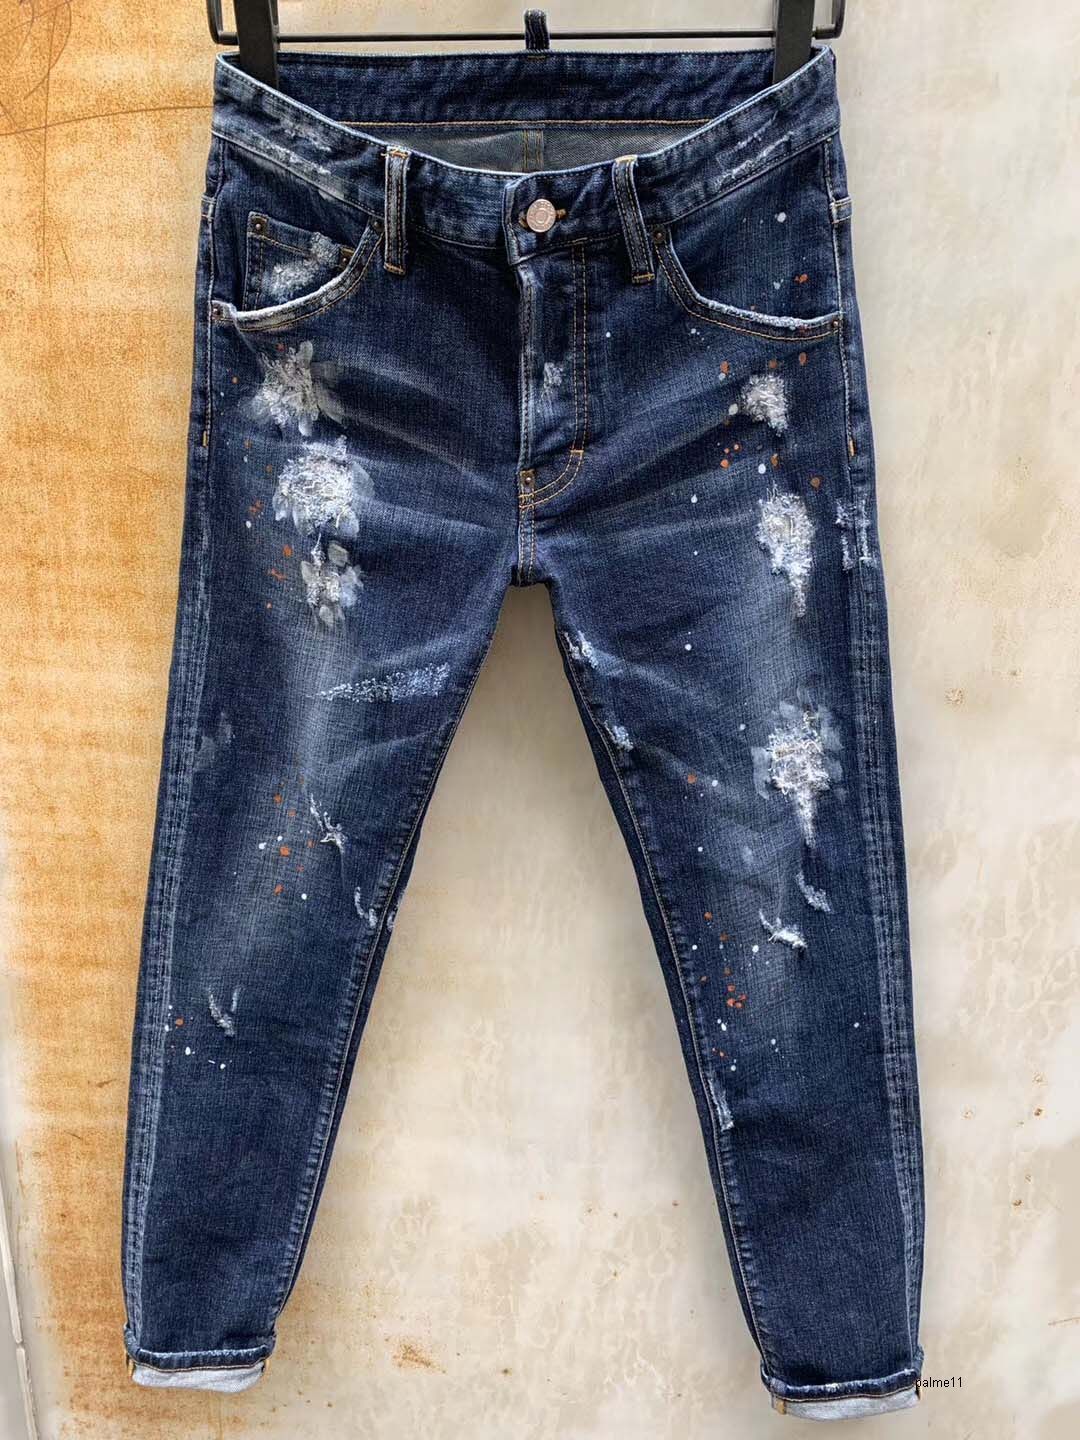 Contribuir Estimar Betsy Trotwood dsquared2 jeans de diseñador para hombre mens luxury designer jeans fashion  Italy ds2 denim ripped high